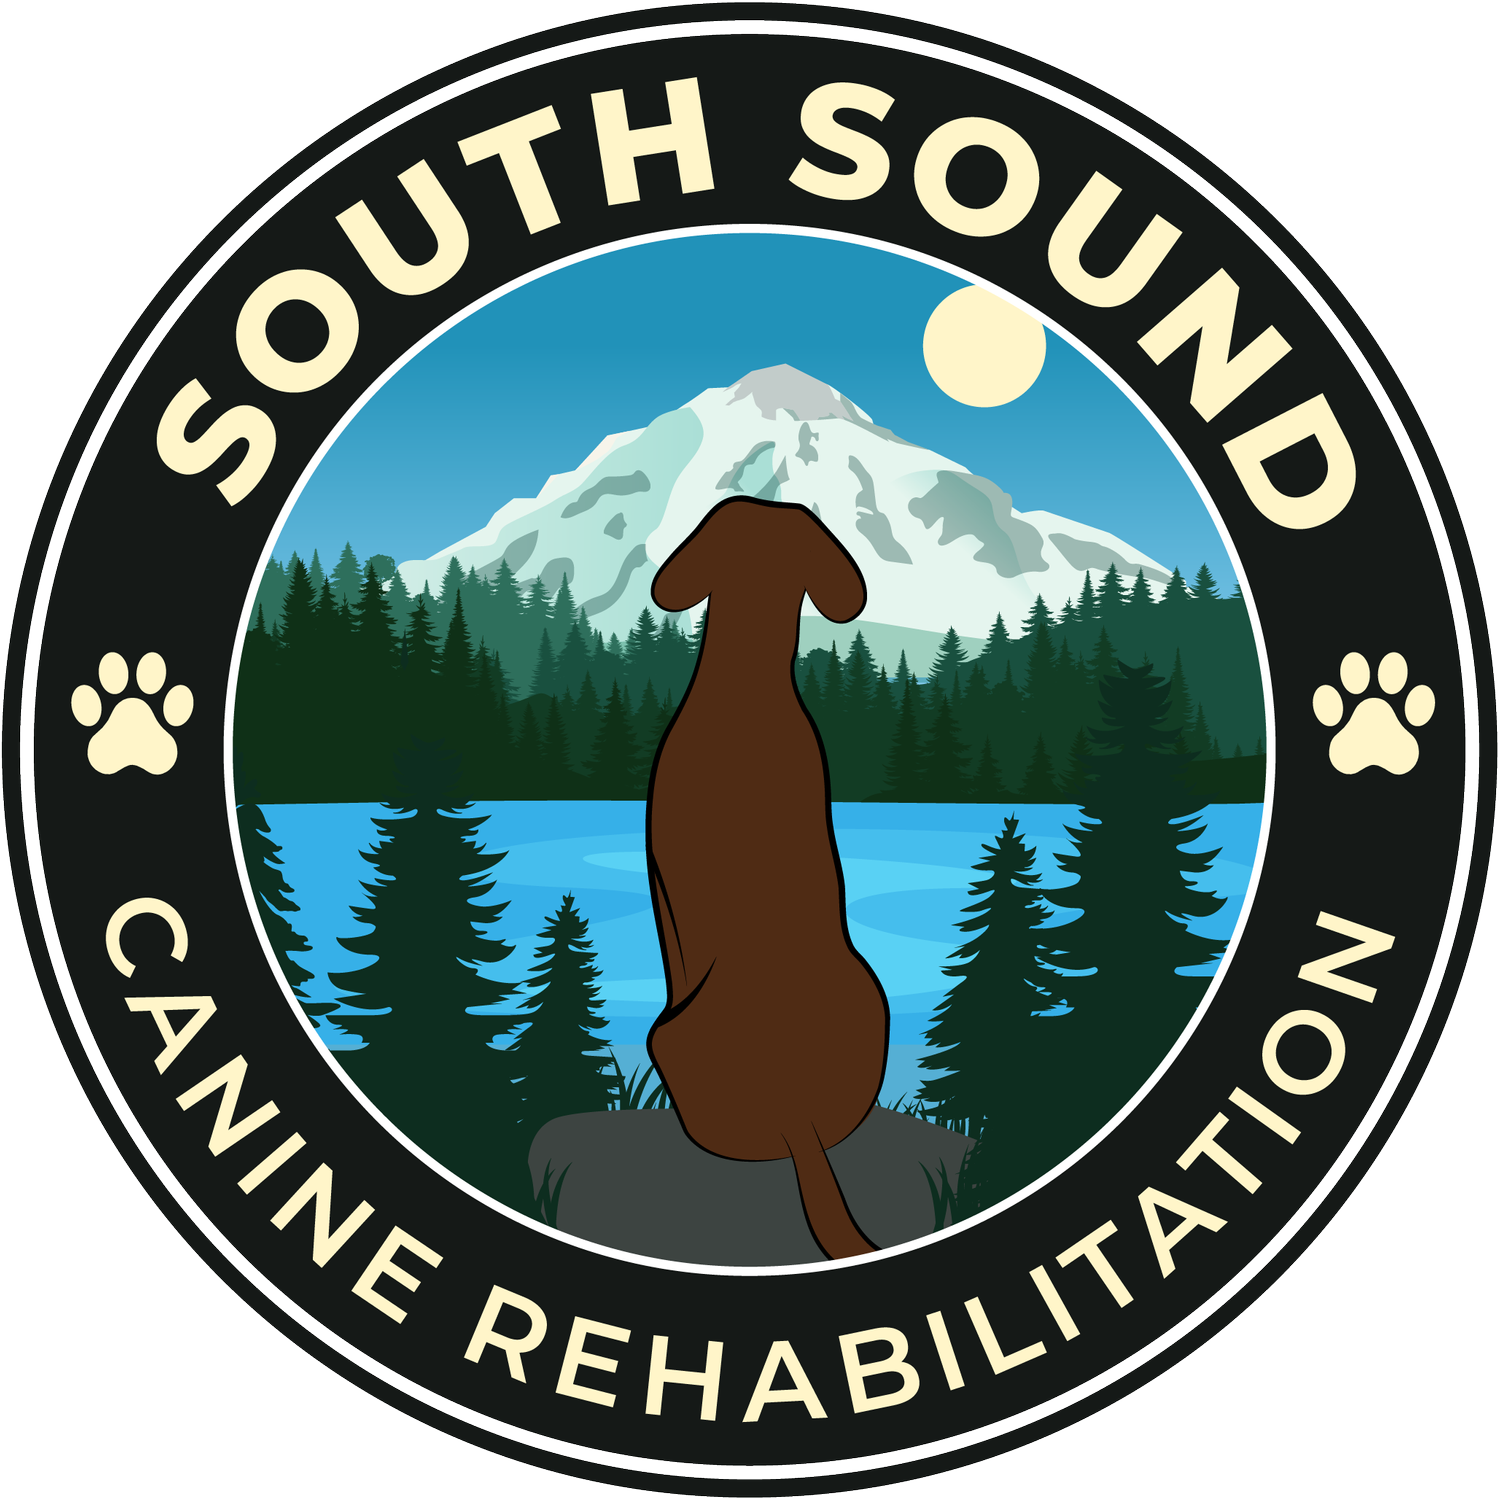 South Sound Canine Rehabilitation